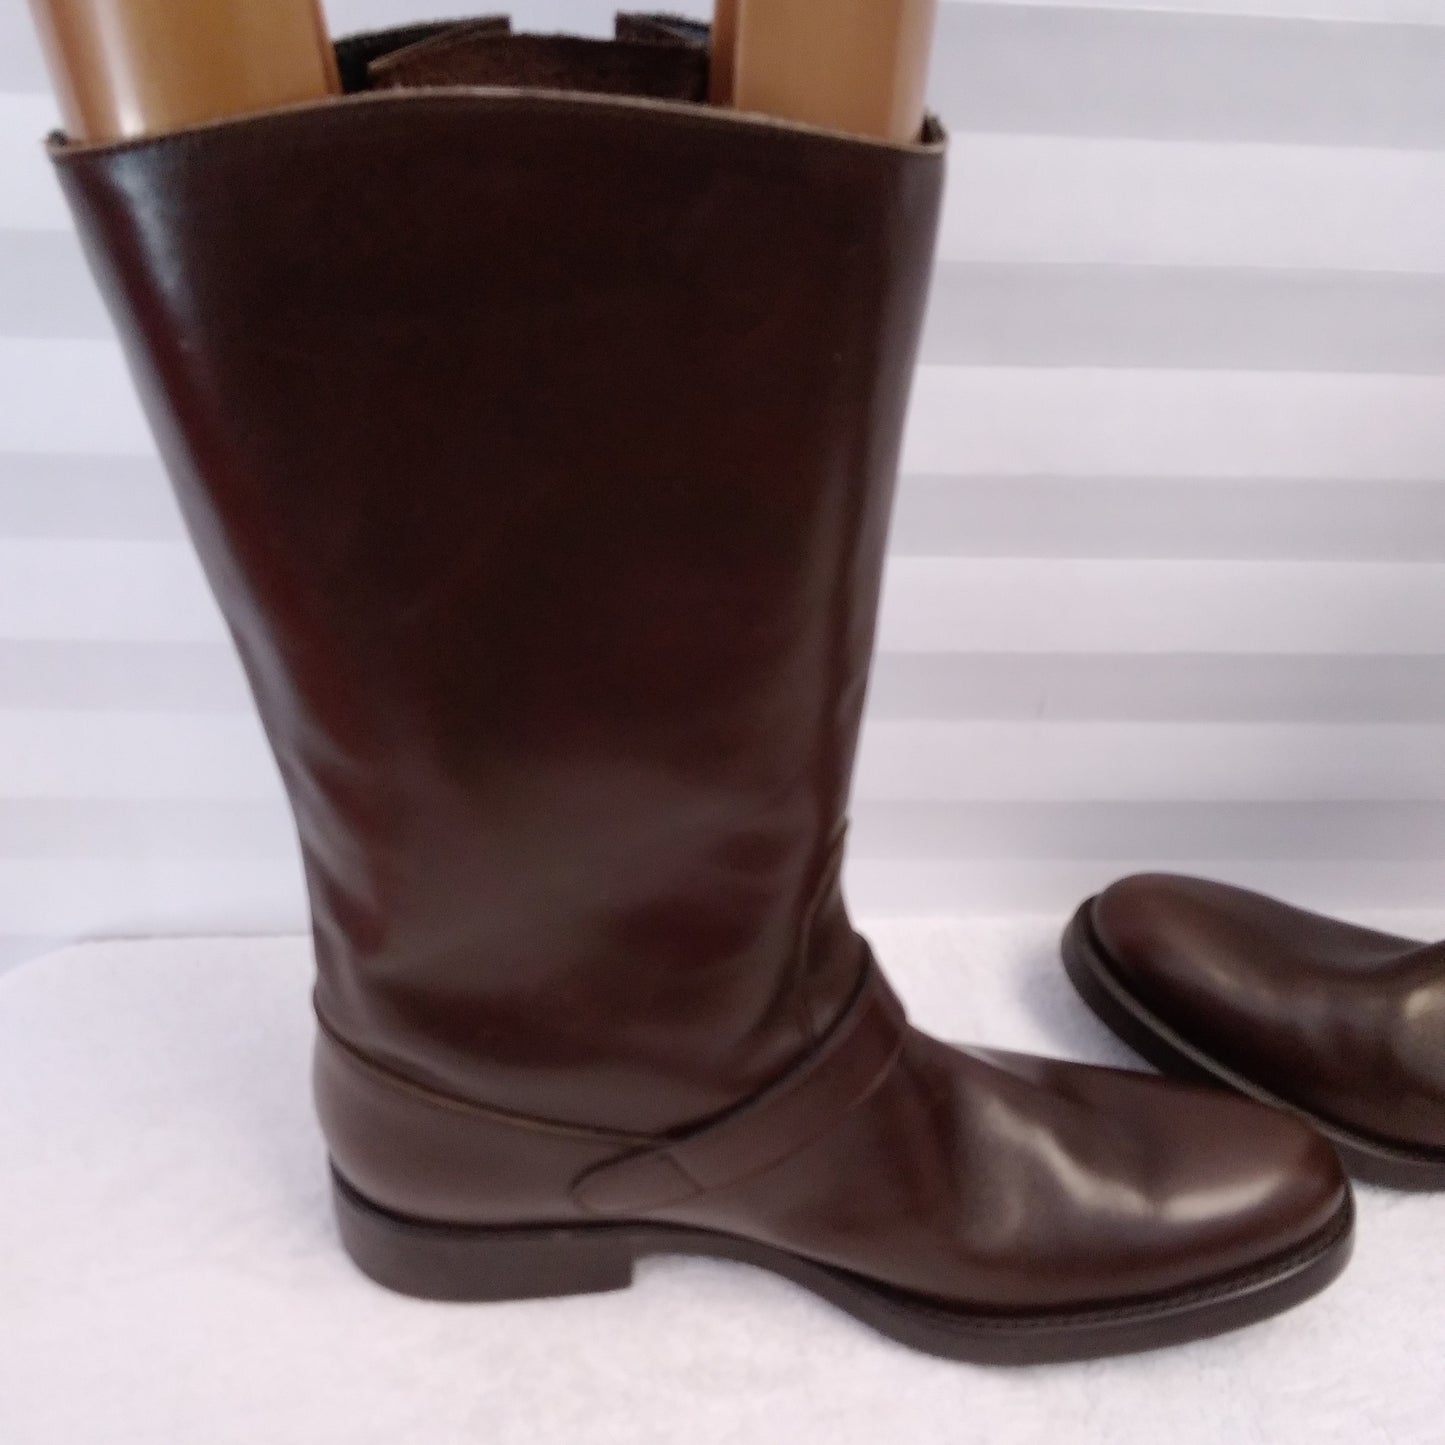 NWOB - Studio Pollini Brown Mid-Calf Boots - Size 40 (US 9)